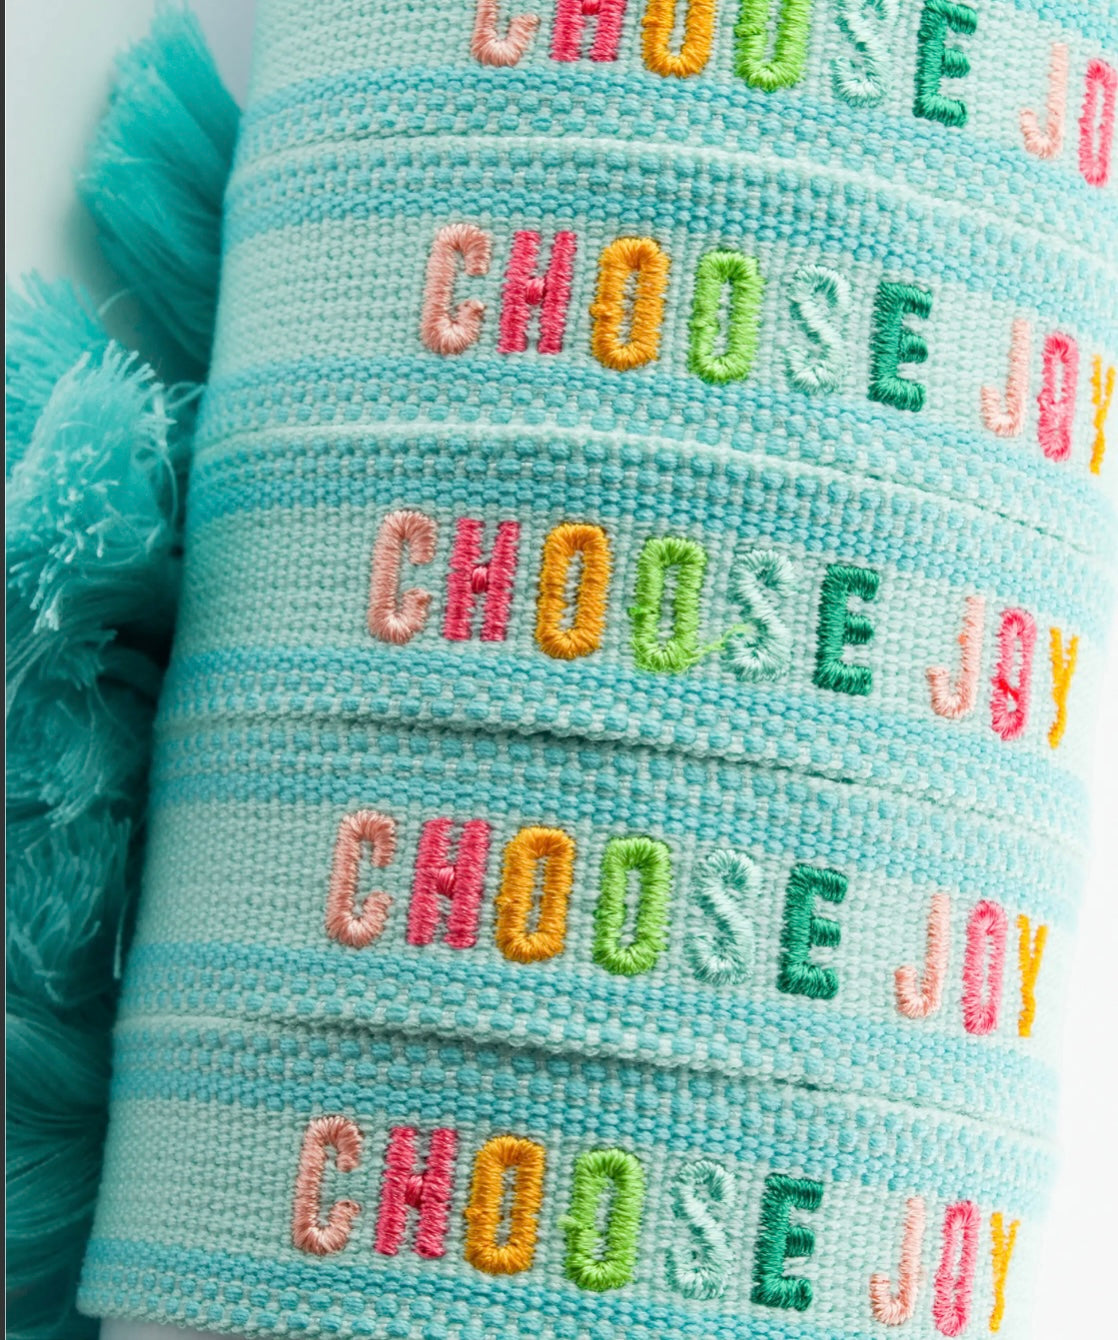 Choose Joy Bracelet